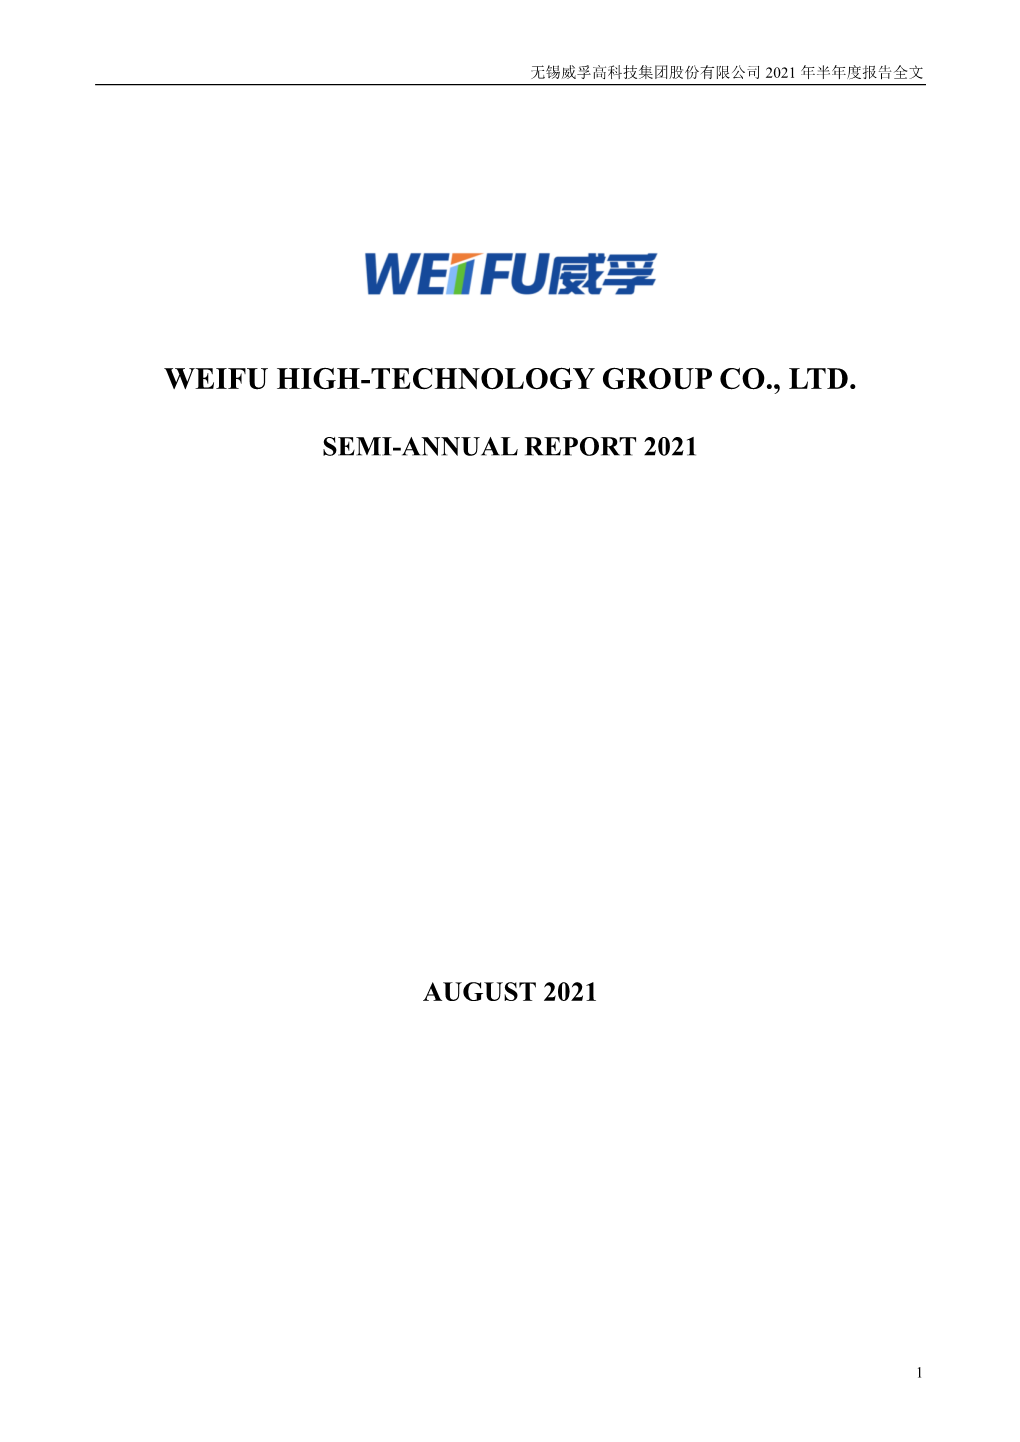 Weifu High-Technology Group Co., Ltd